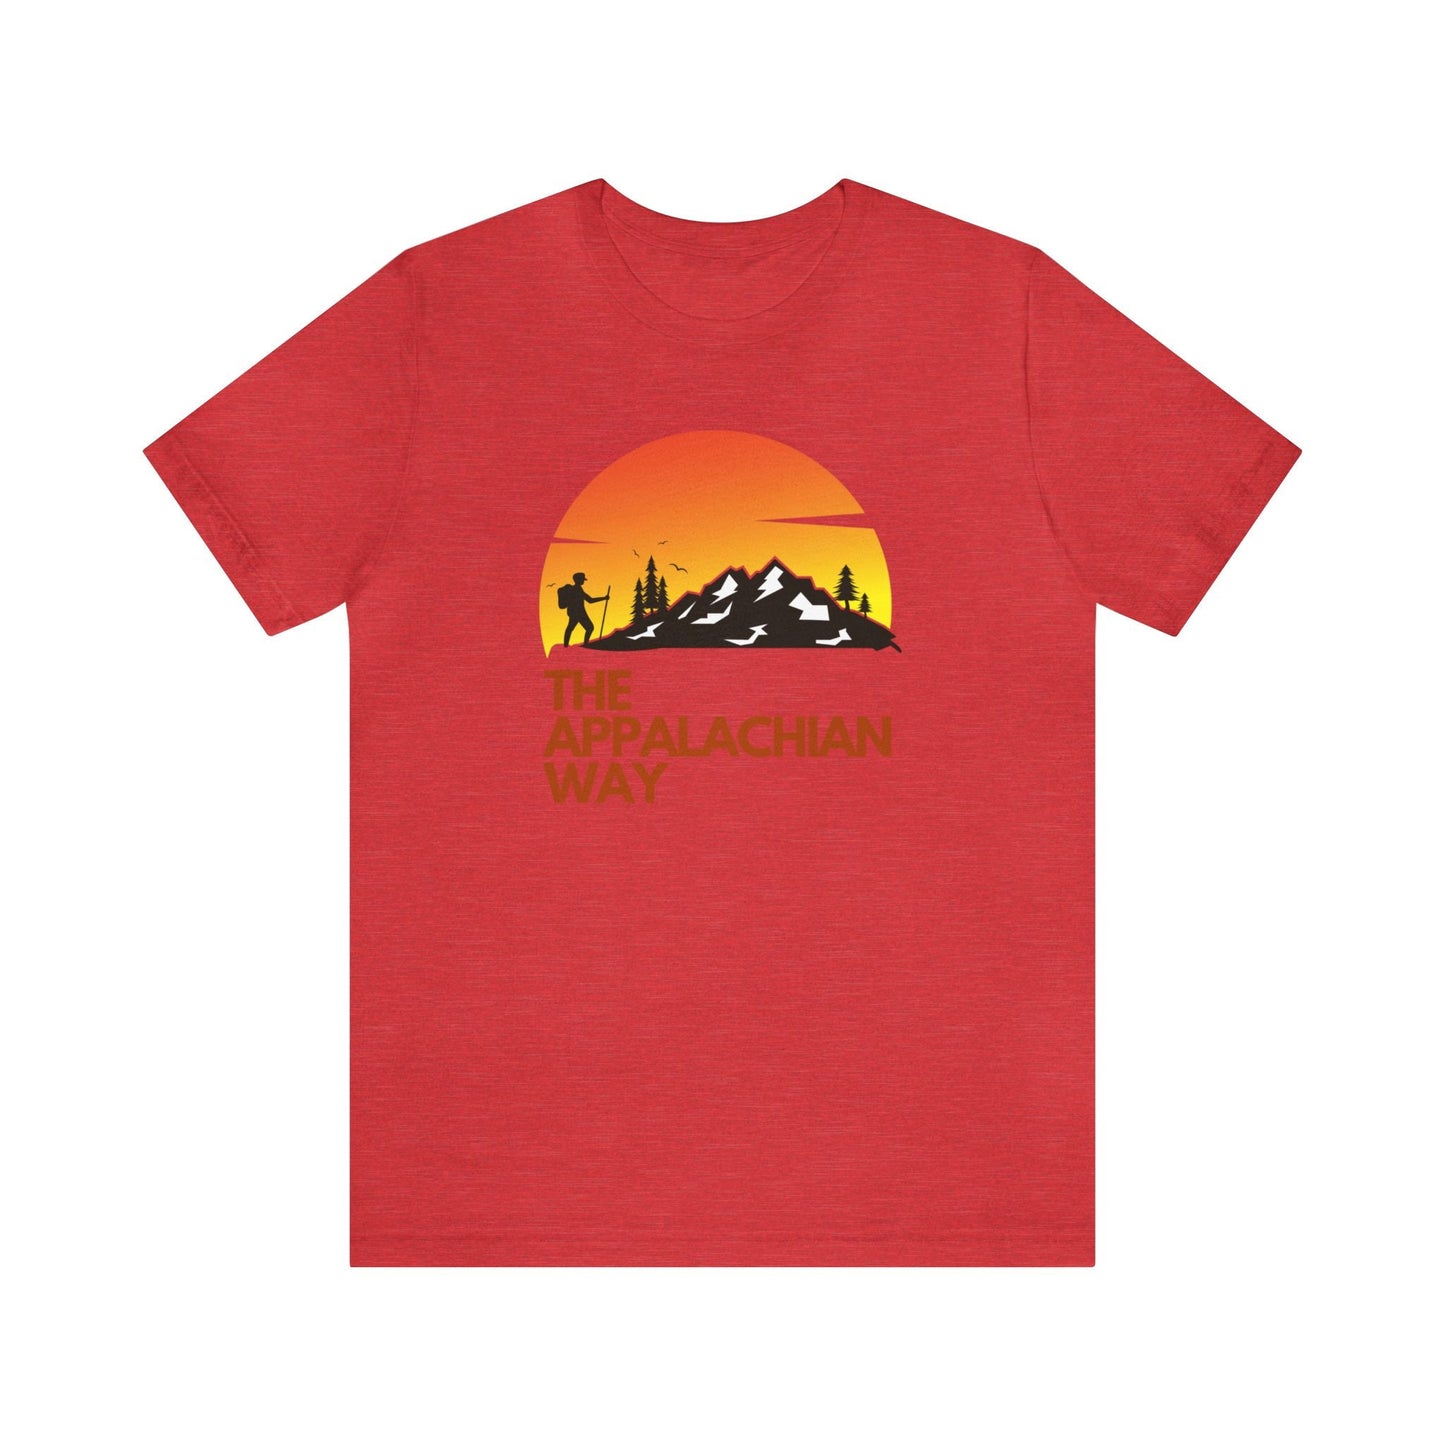 The Appalachian Way Hiking Summit Orange Graphic T-shirt